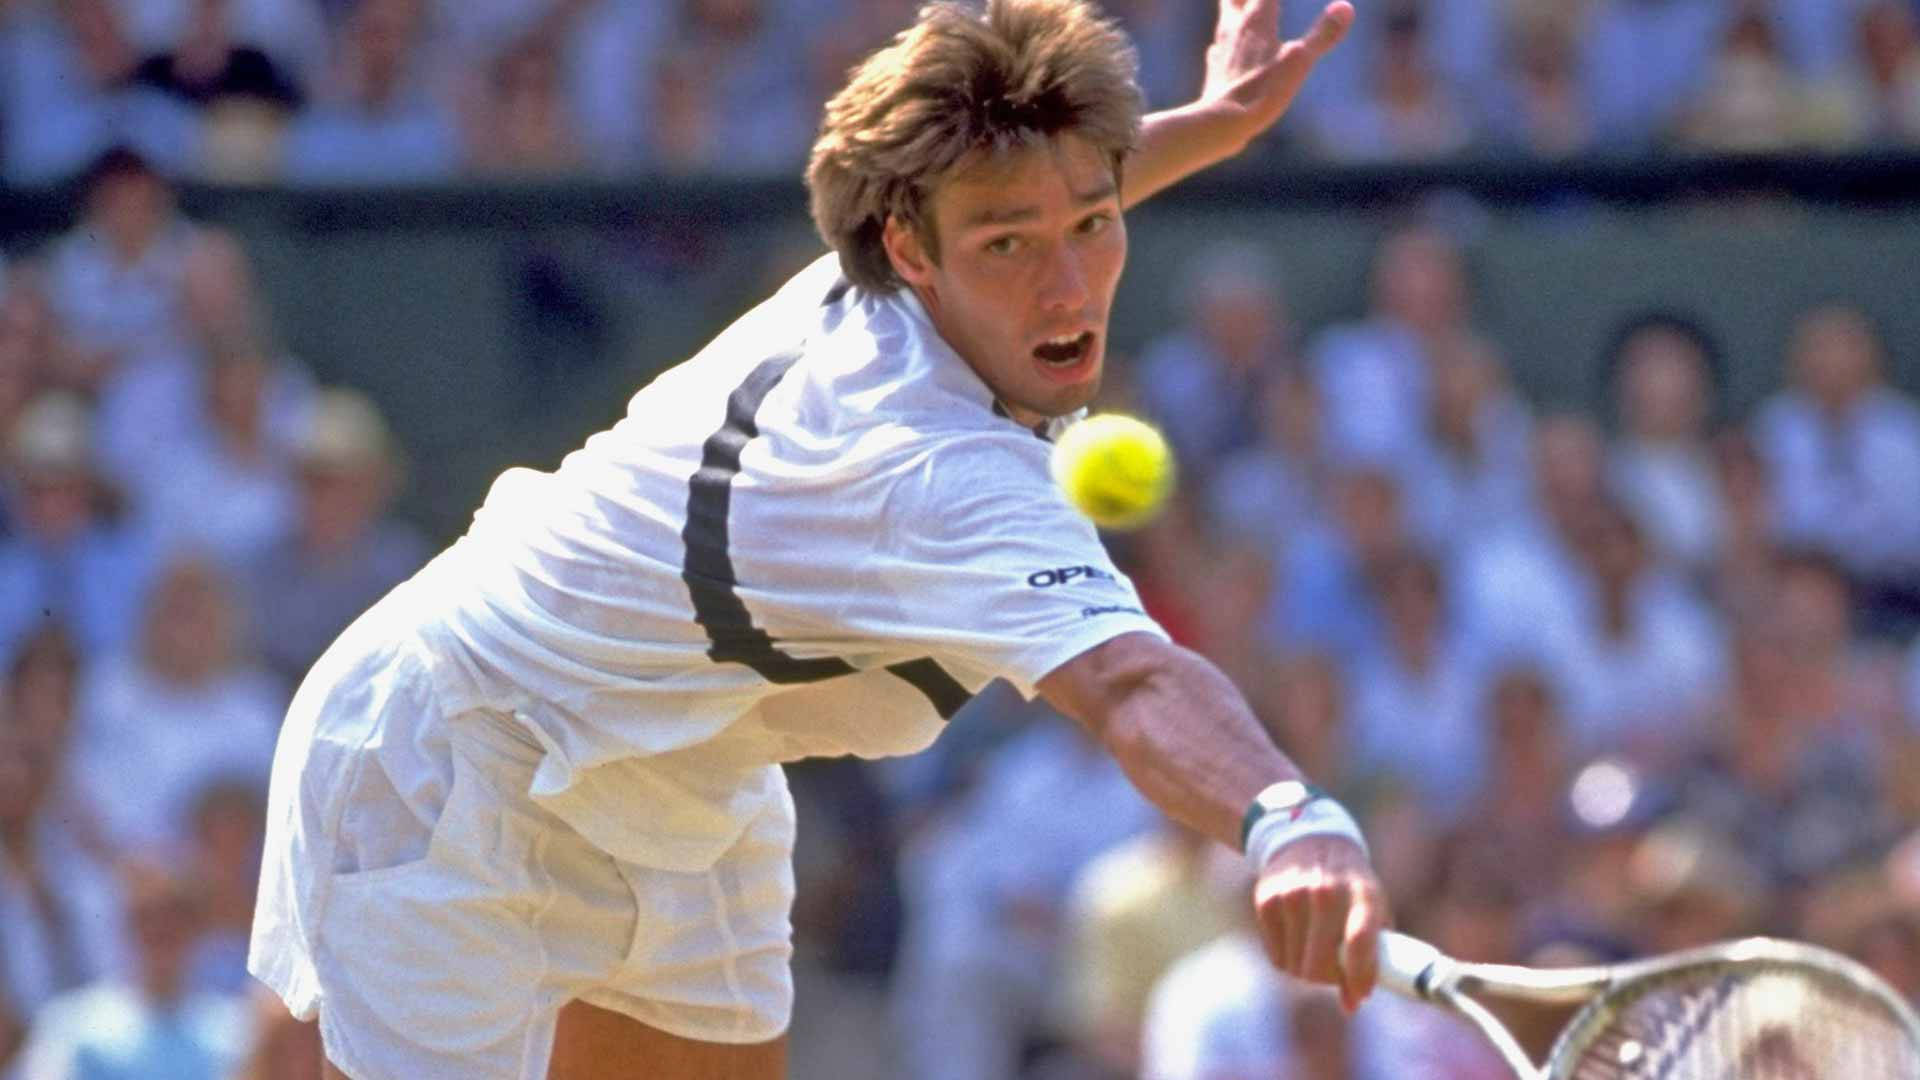 Michael Stich fiercely chasing a ball during a tennis match Wallpaper